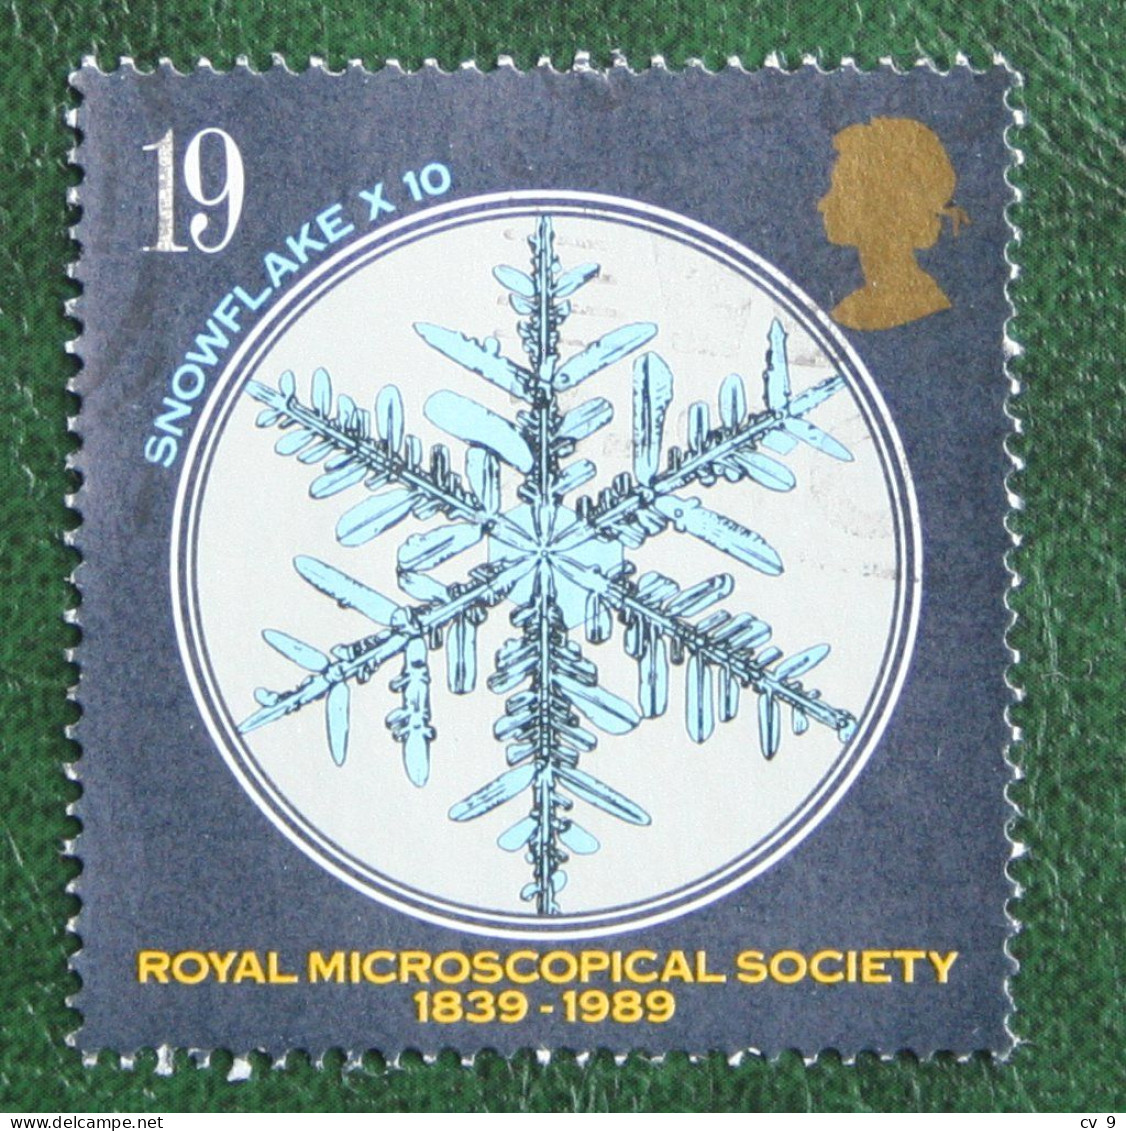 Royal Microscopical Society RMS Mi (1218 1221) 1989 Used Gebruikt Oblitere ENGLAND GRANDE-BRETAGNE GB GREAT BRITAIN - Gebruikt